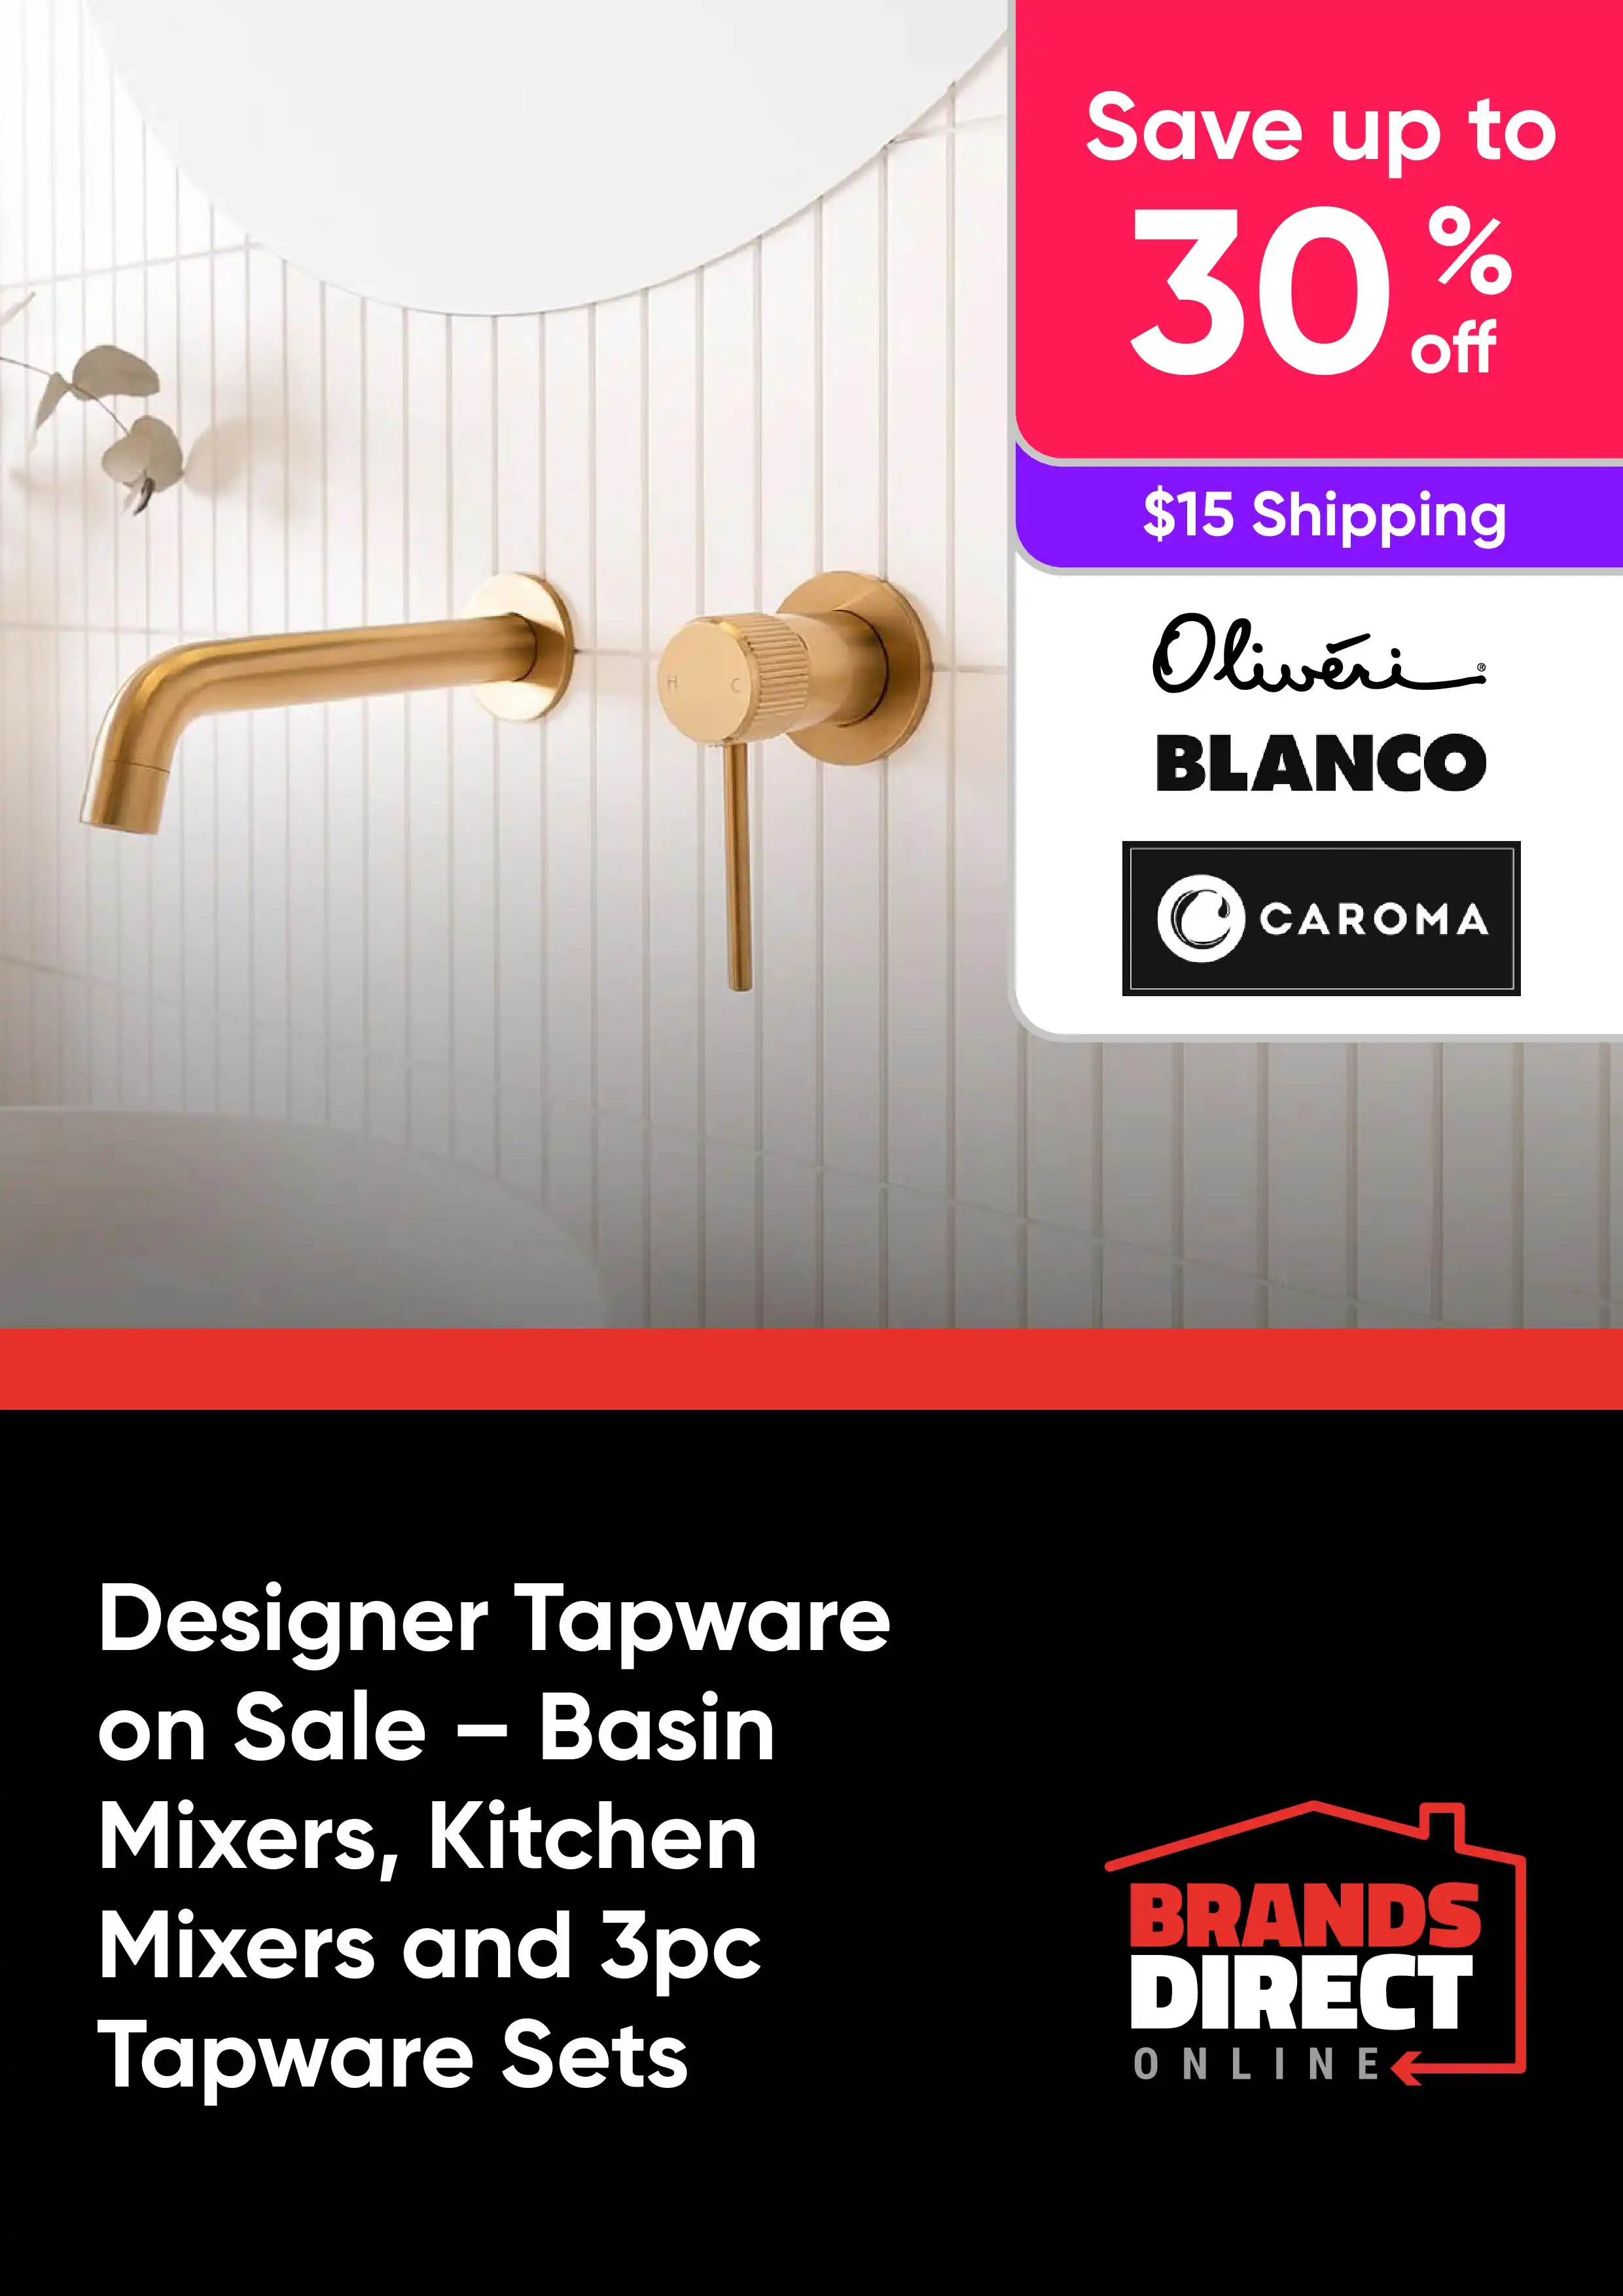 Designer Tapware on Sale - Save Up to 30% Off